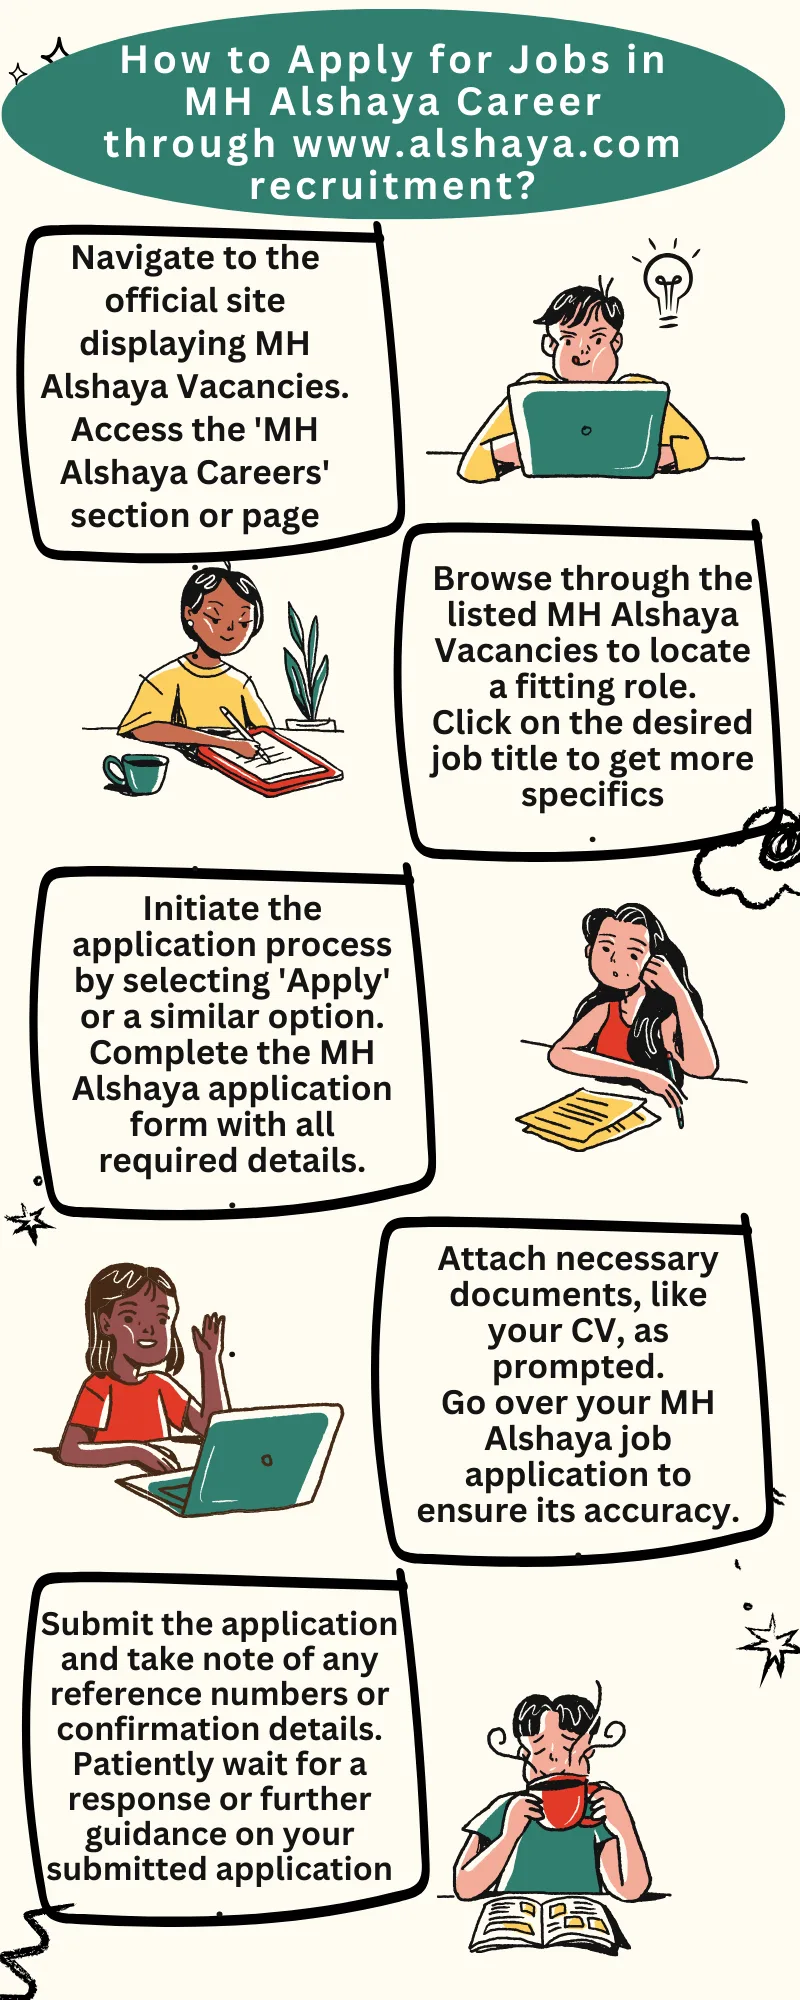 How to Apply for Jobs in MH Alshaya Career through www.alshaya.com recruitment?